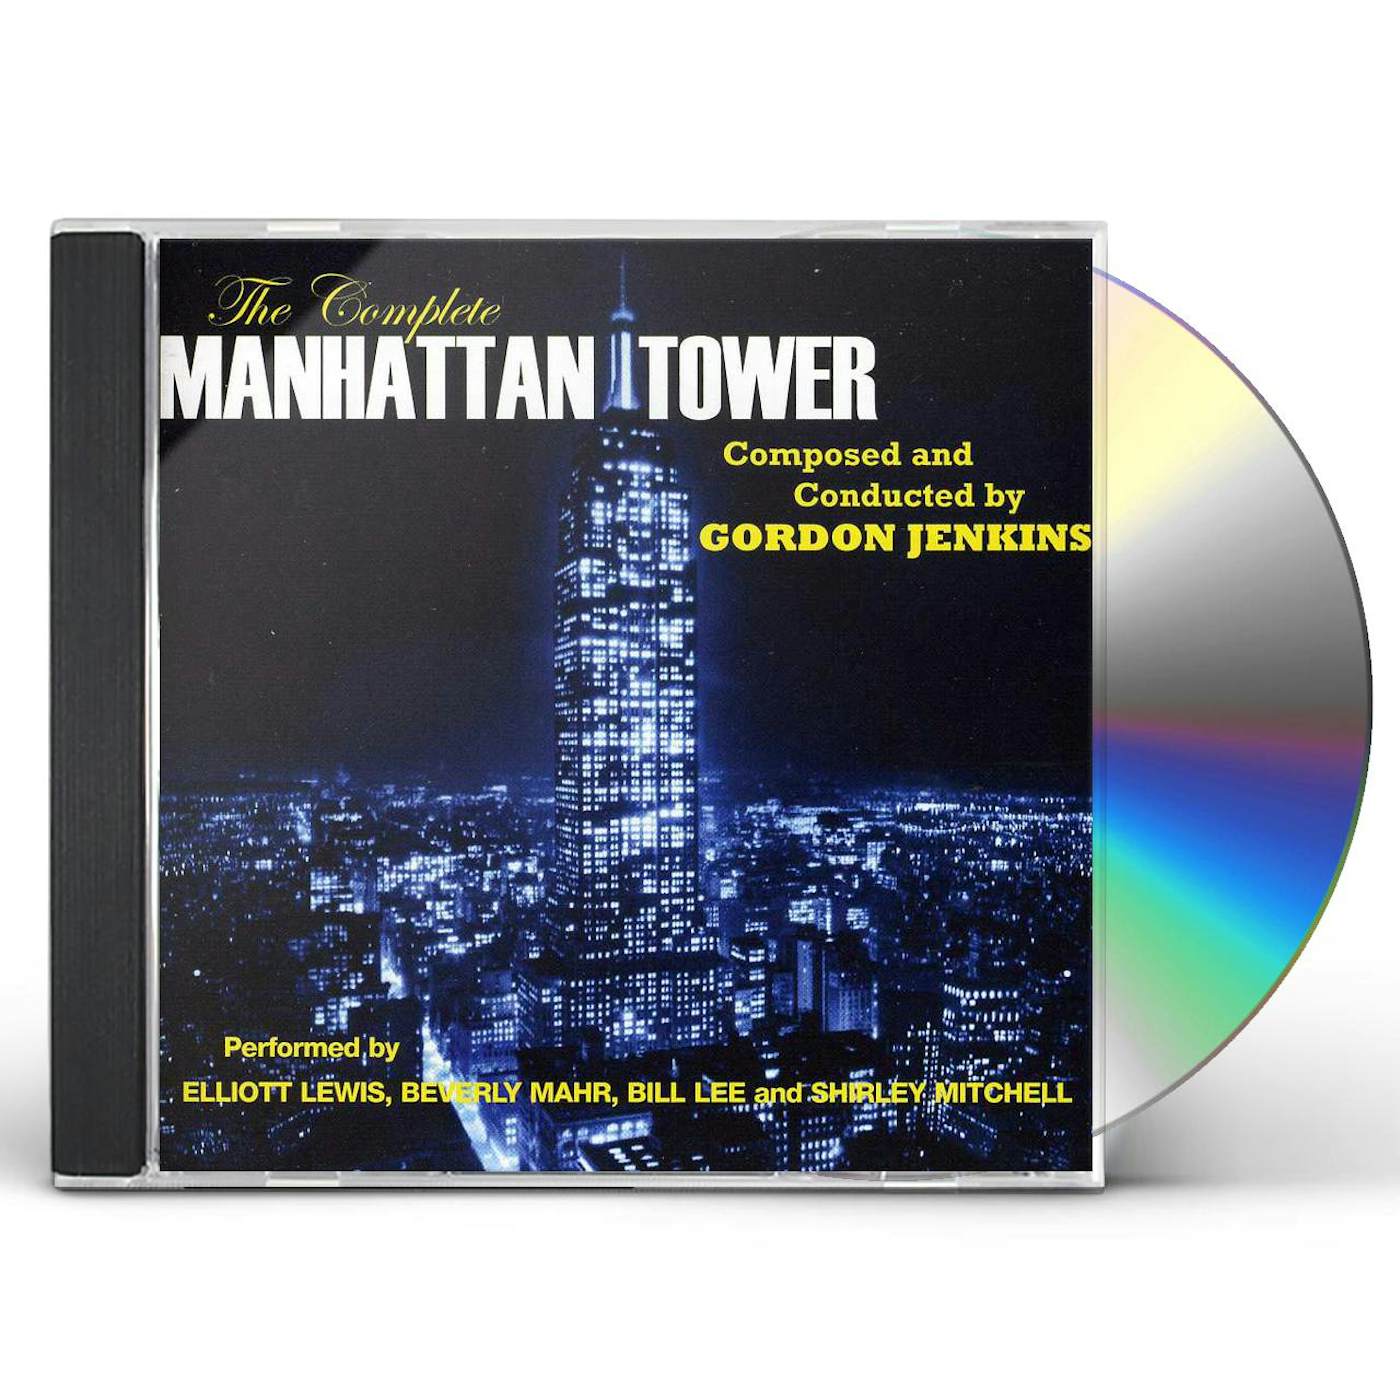 Gordon Jenkins COMPLETE MANHATTAN TOWER CD